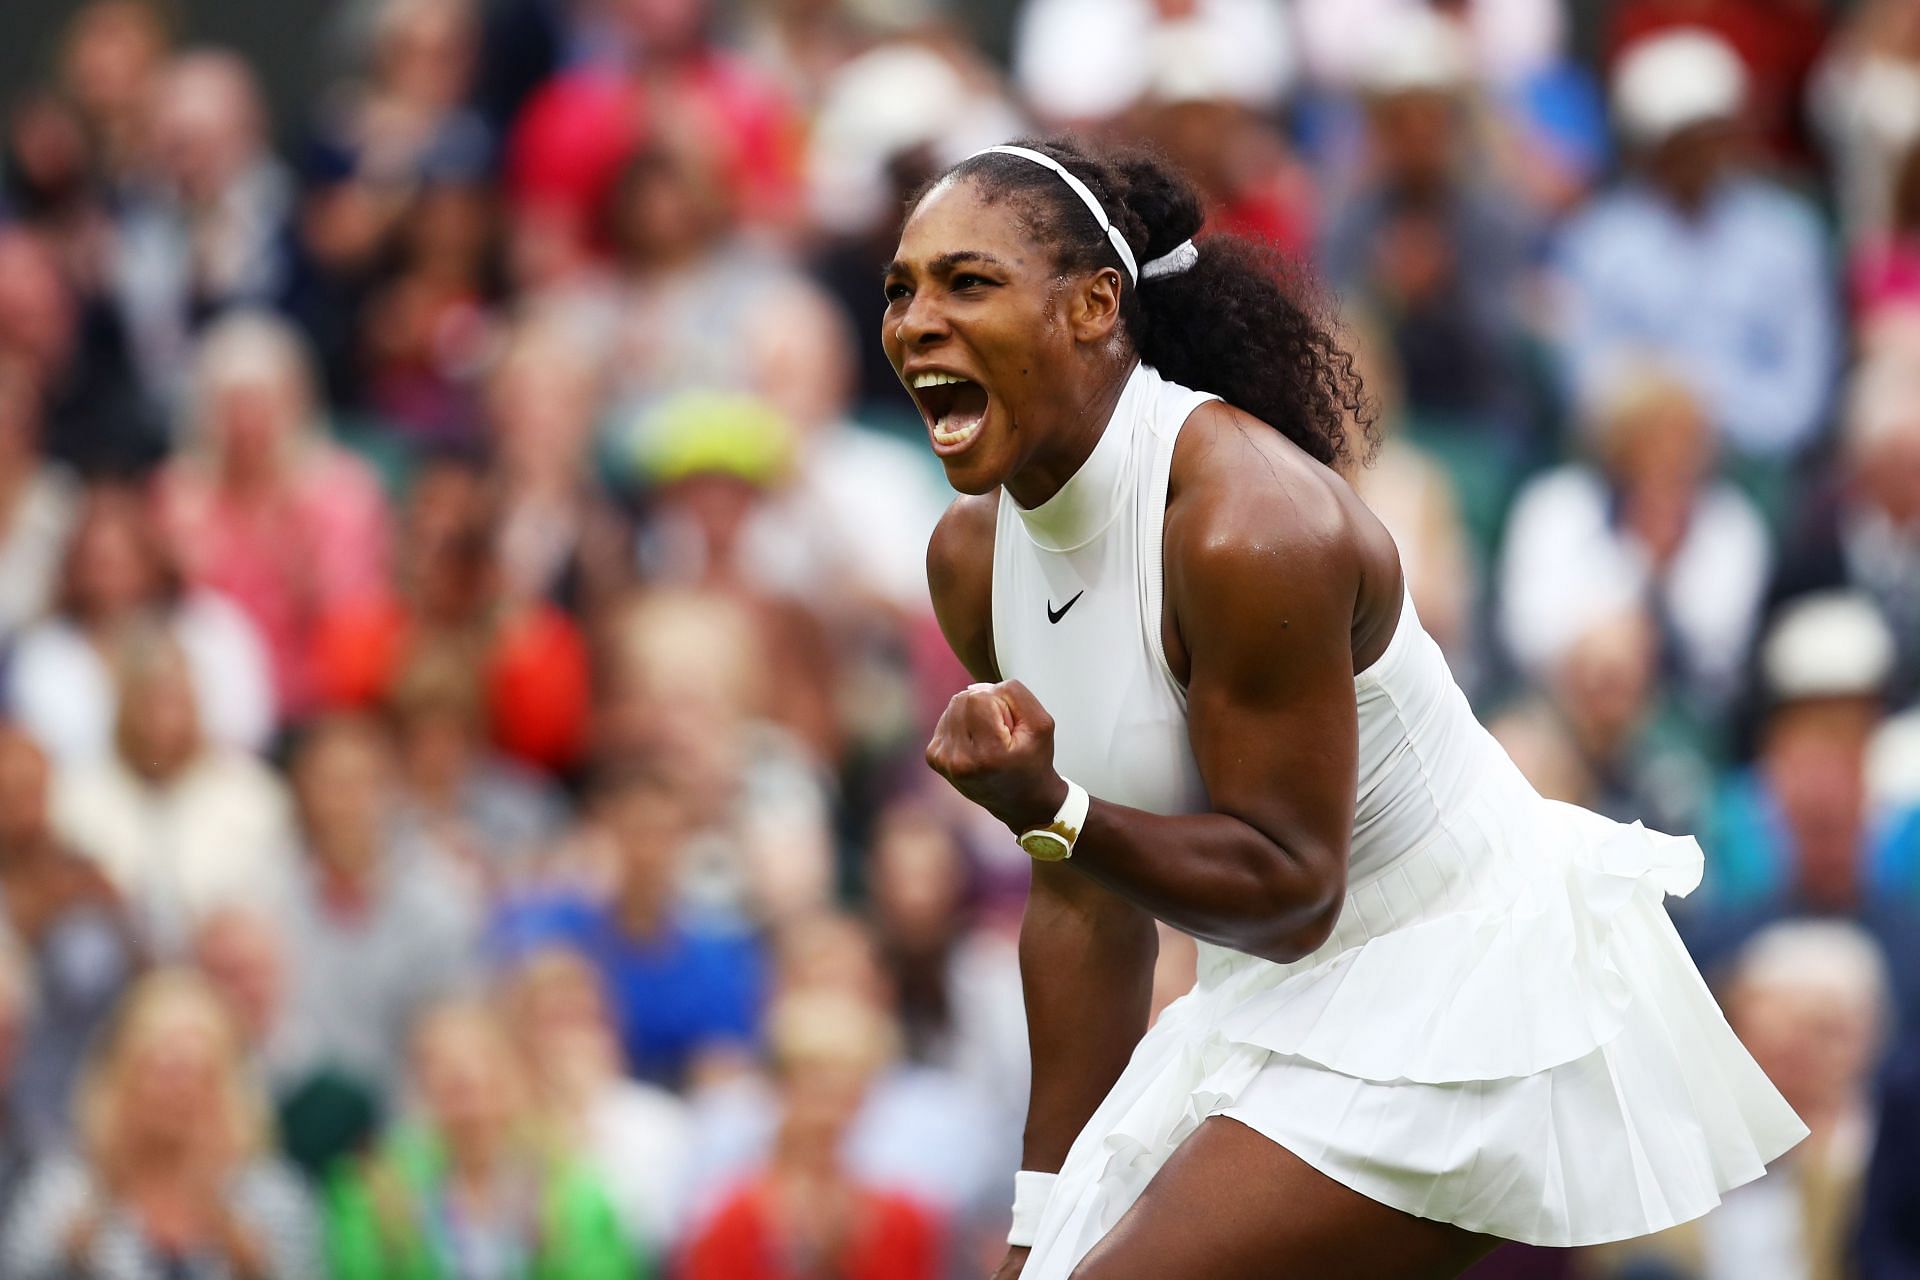 Serena Williams has won 23 Majors